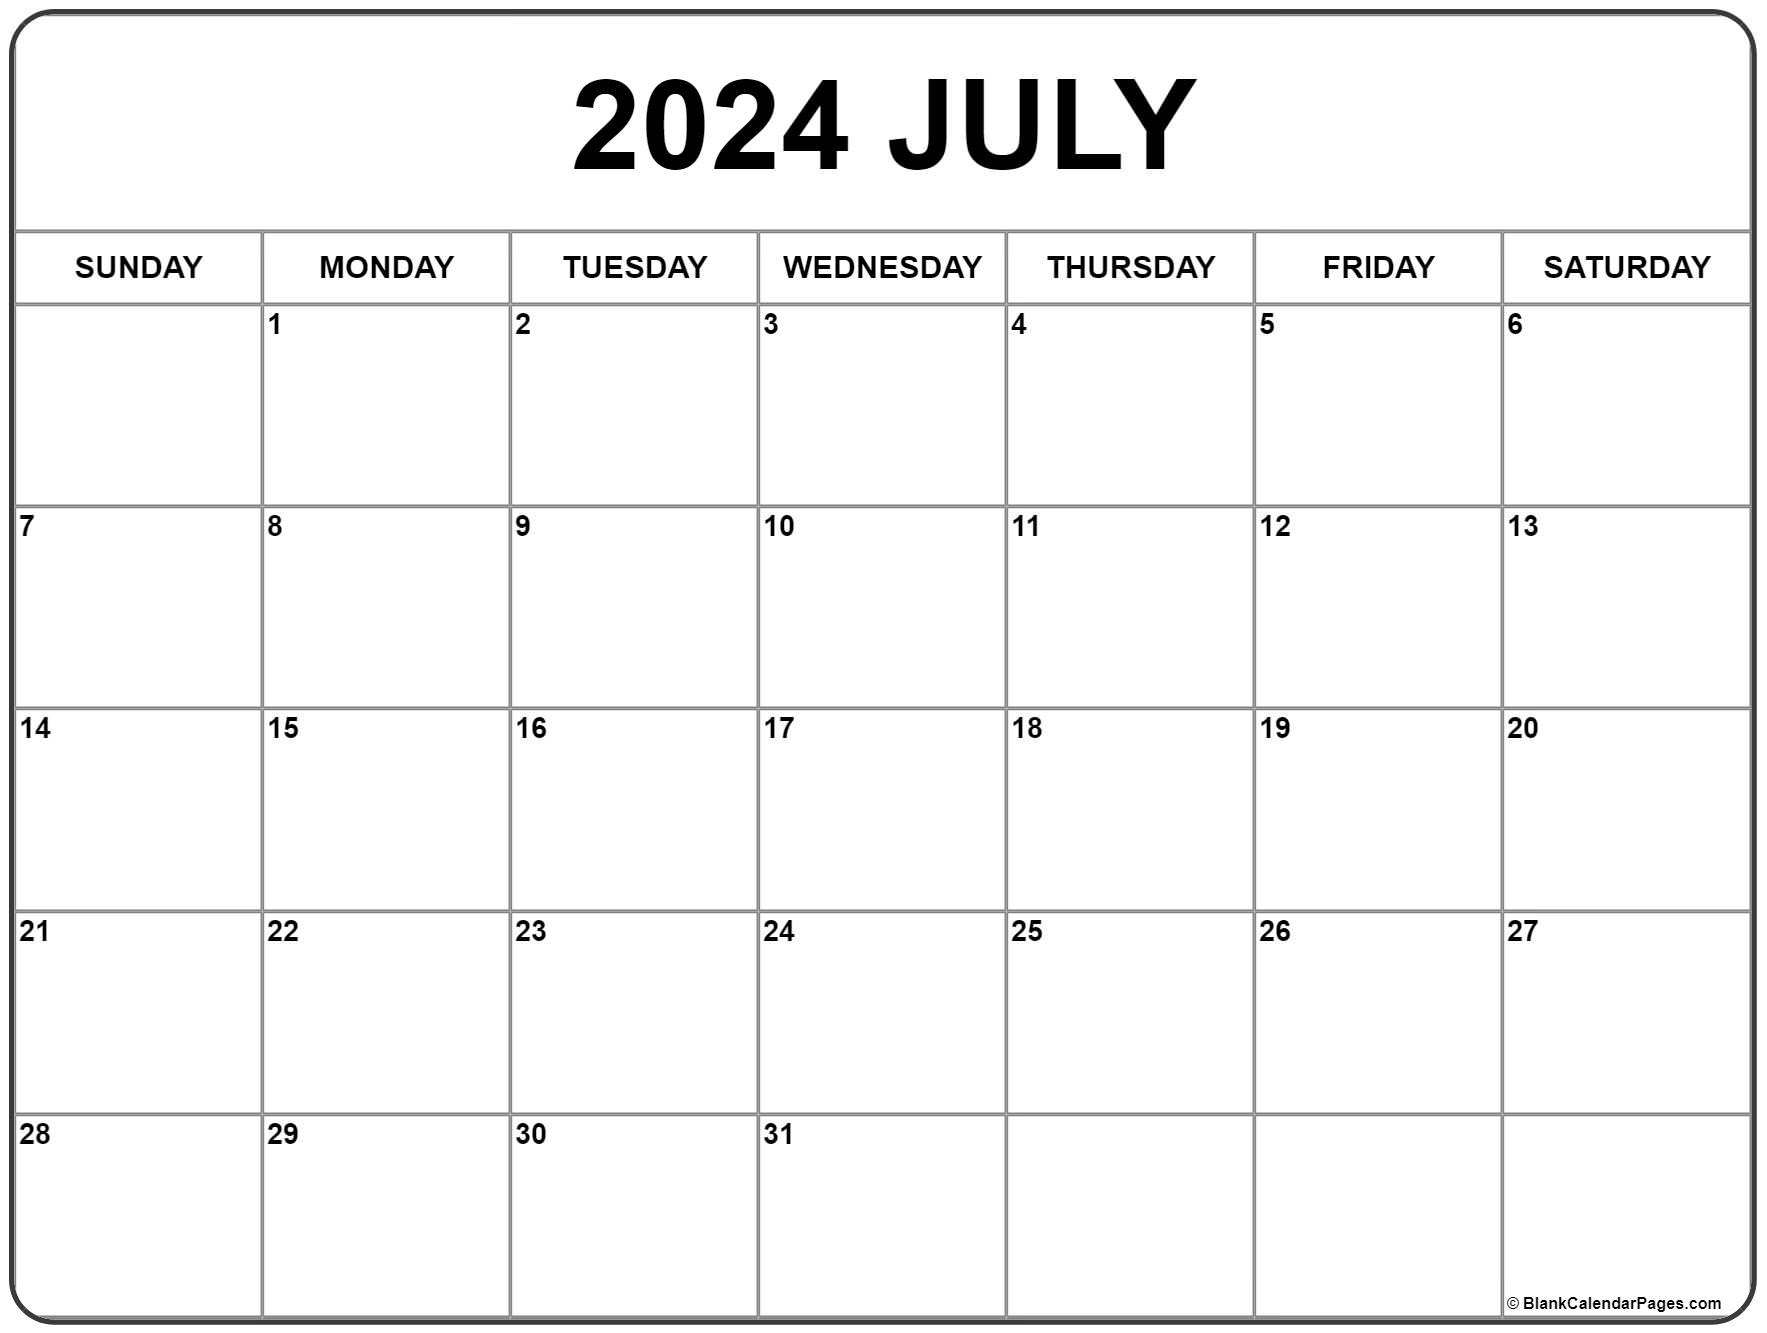 July 2024 Calendar | Free Printable Calendar throughout 2024 Calendar July Month